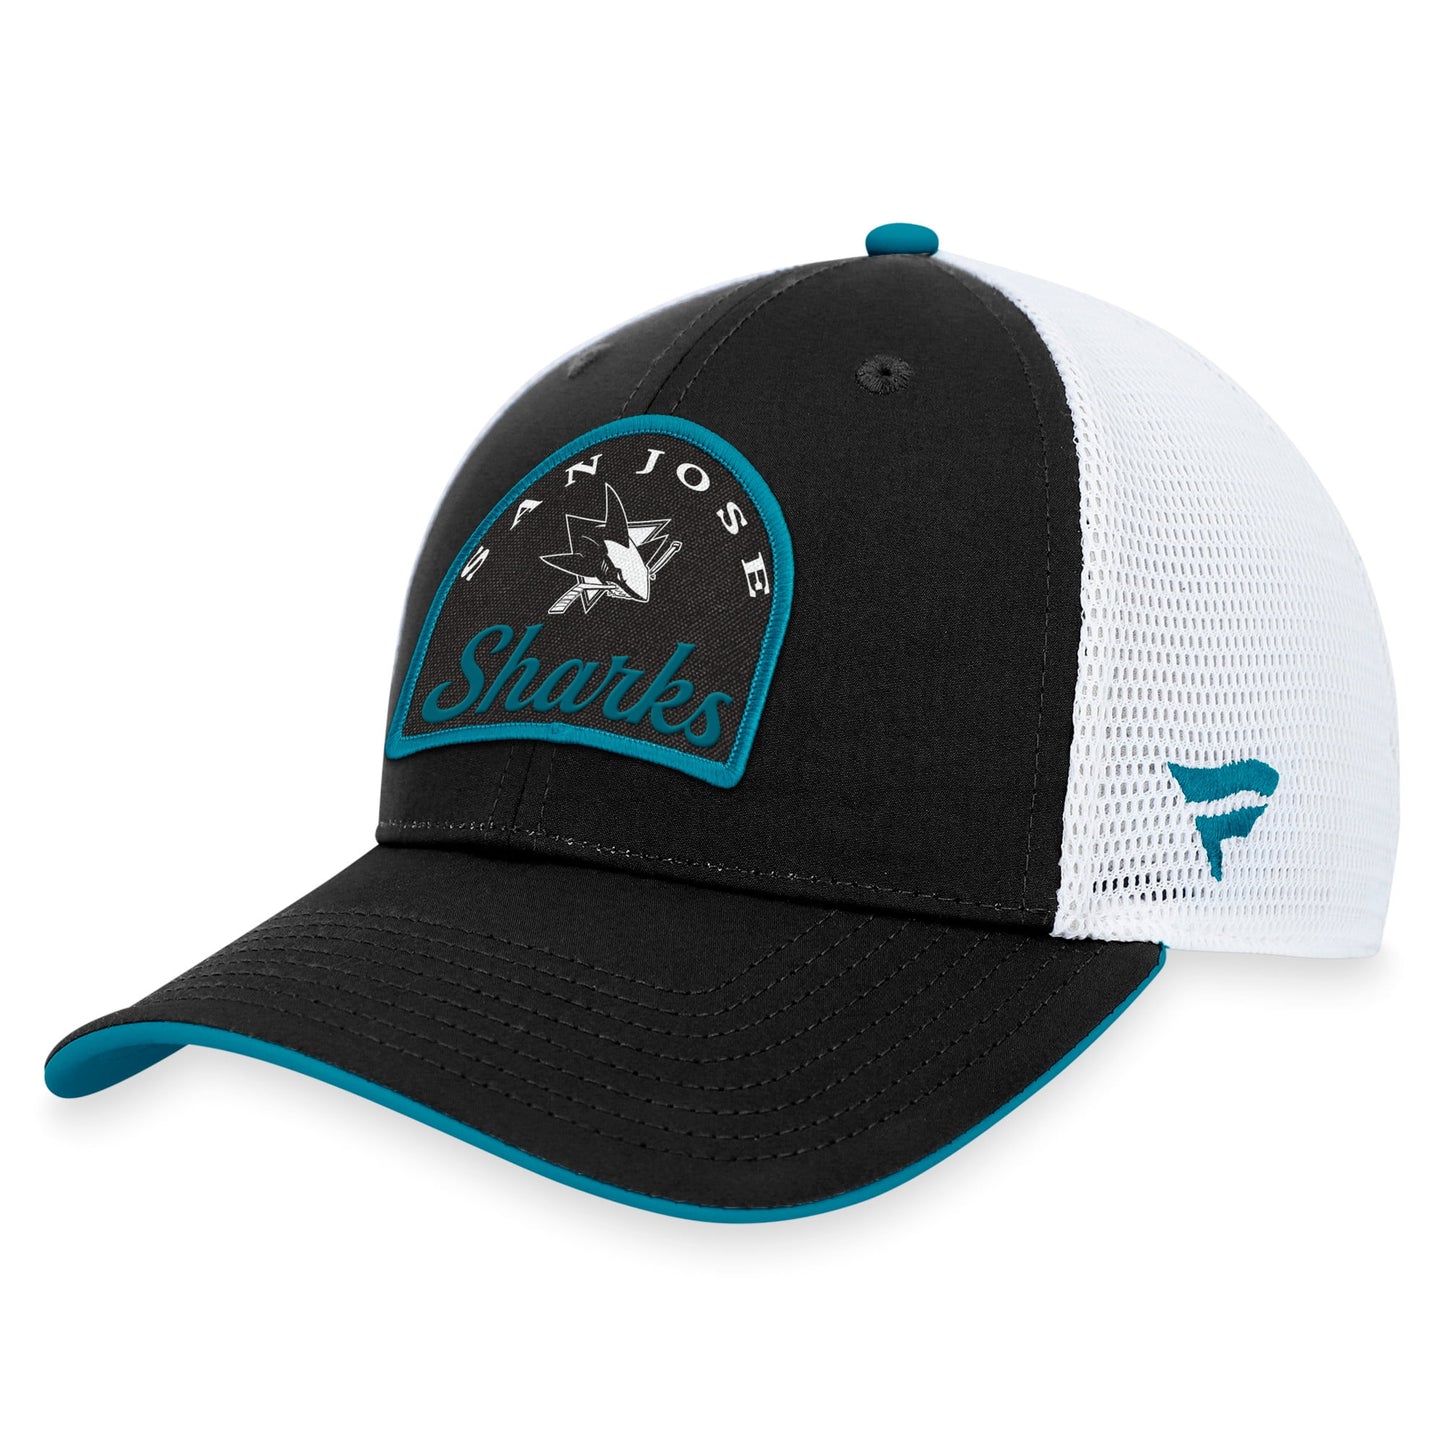 Men's Fanatics Branded Black/White San Jose Sharks Fundamental Adjustable Hat - OSFA